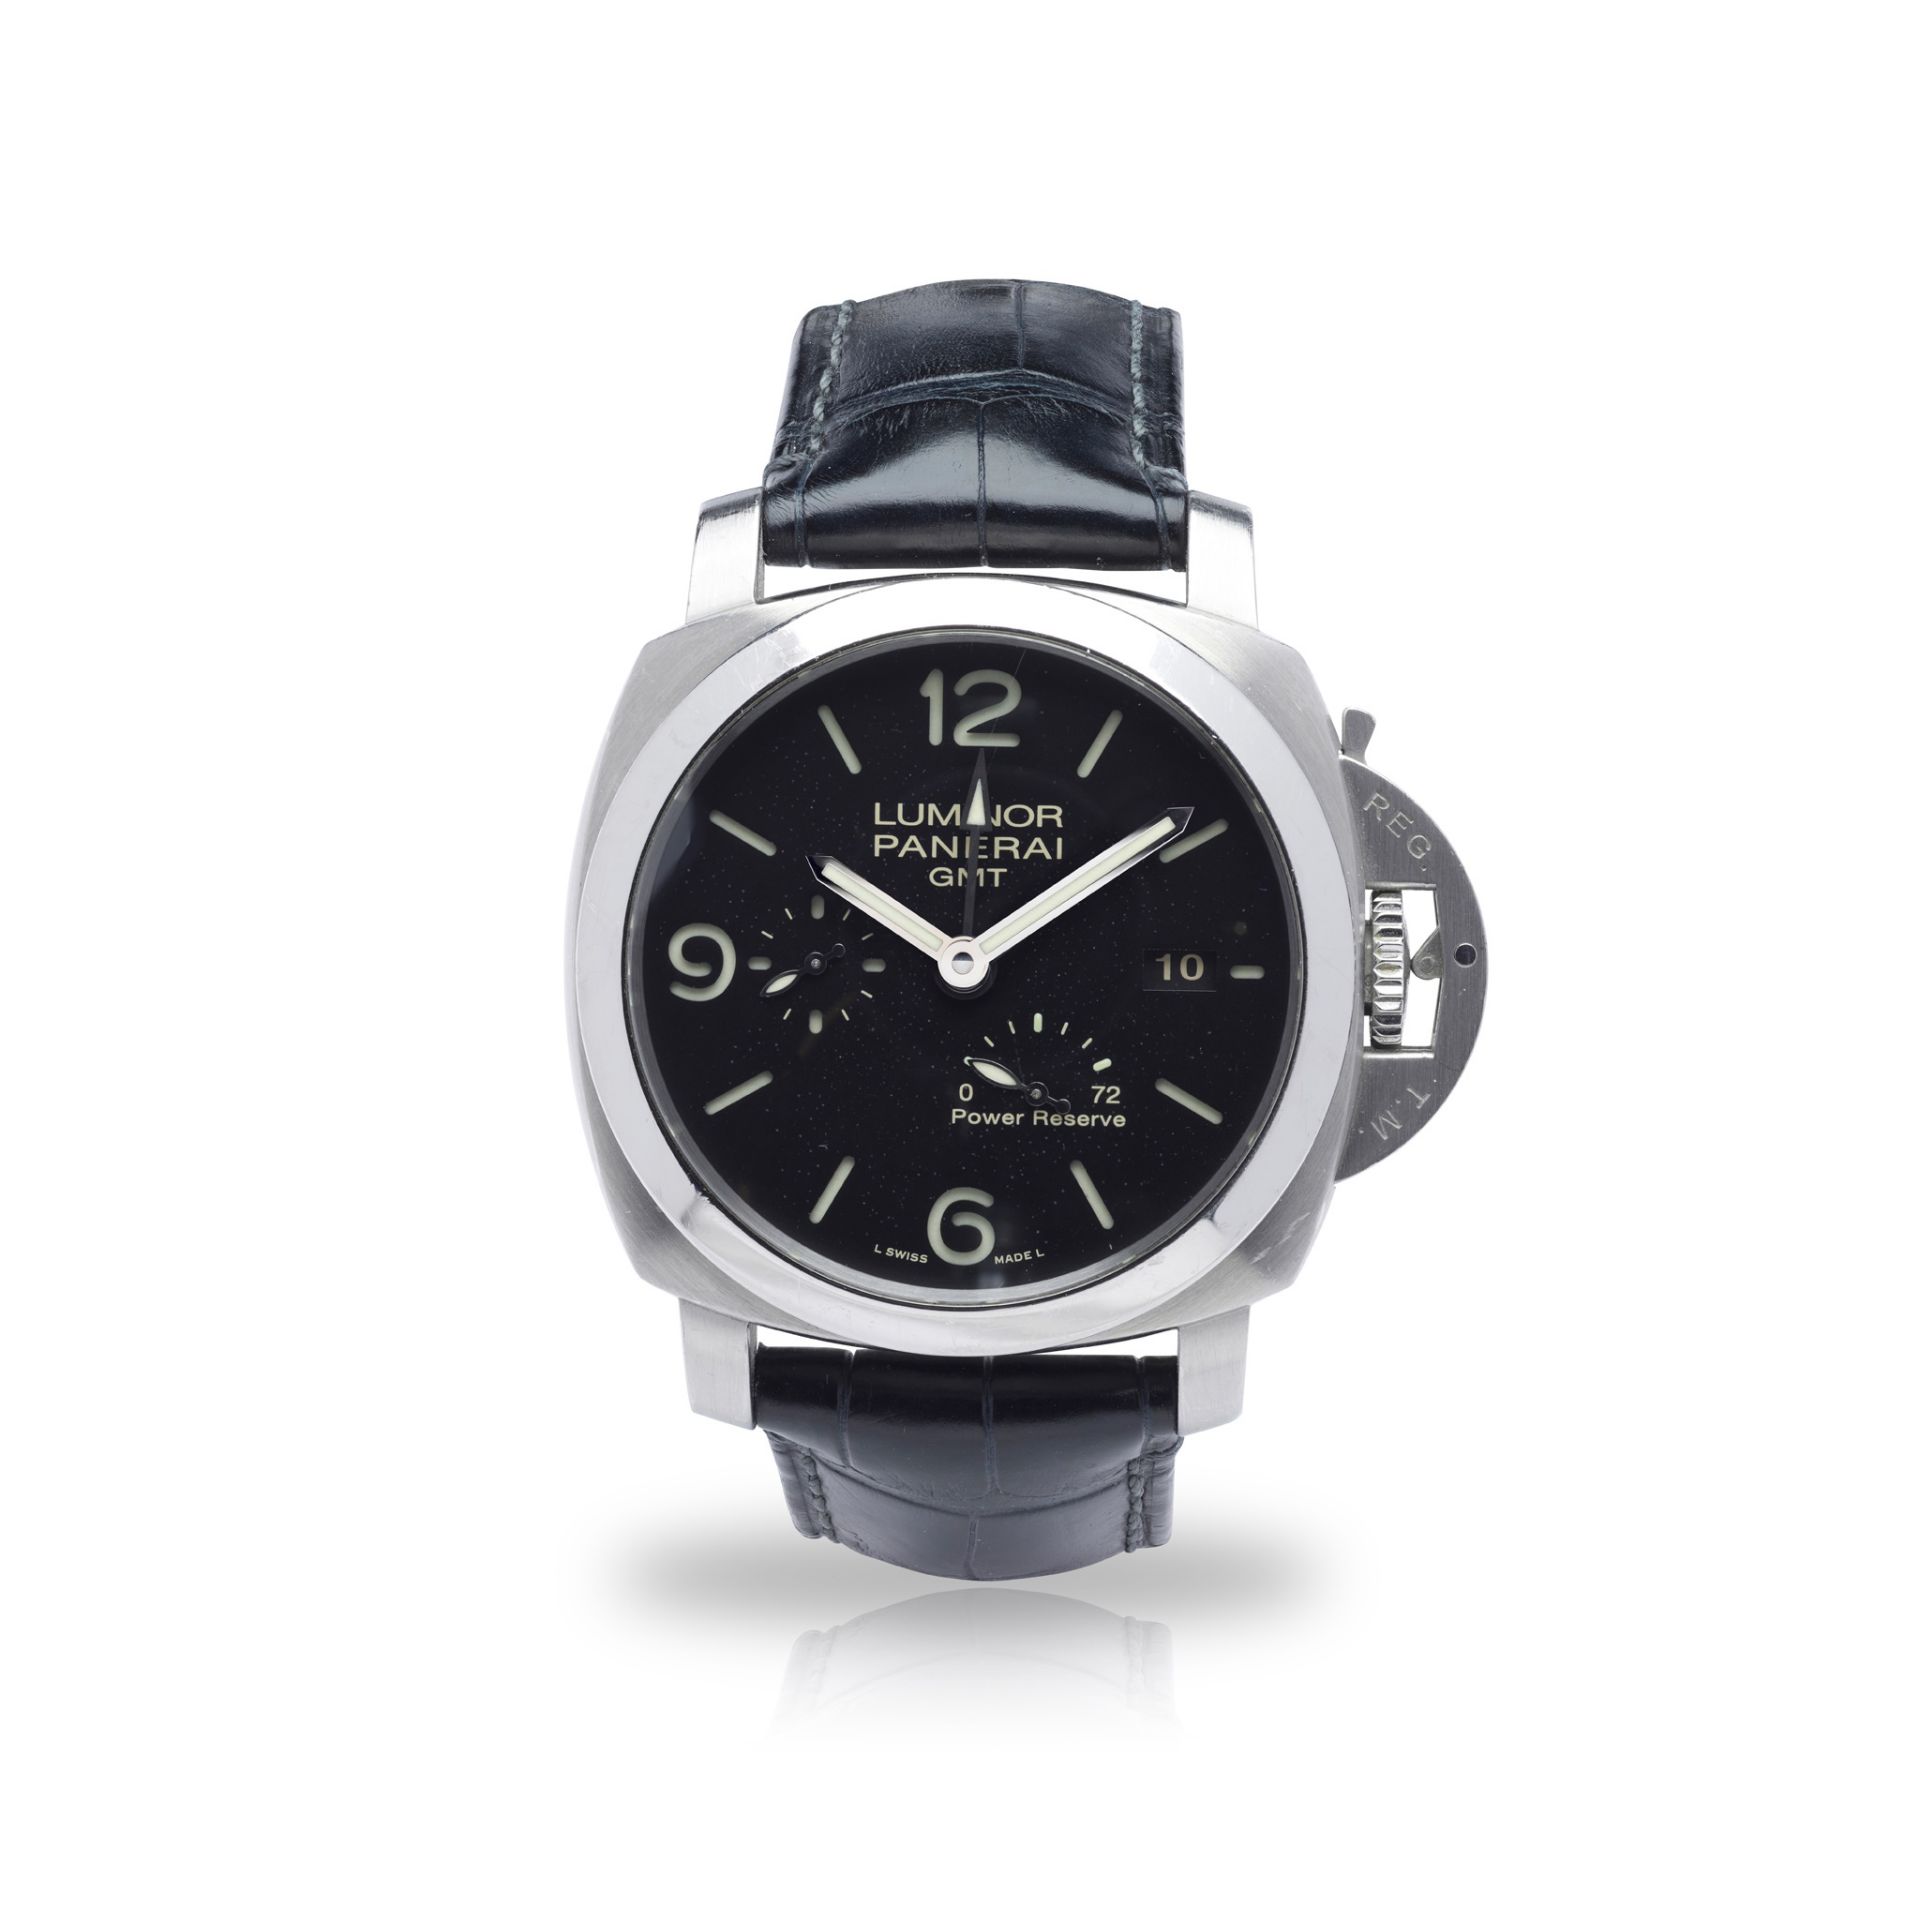 Panerai: a stainless steel wrist watch